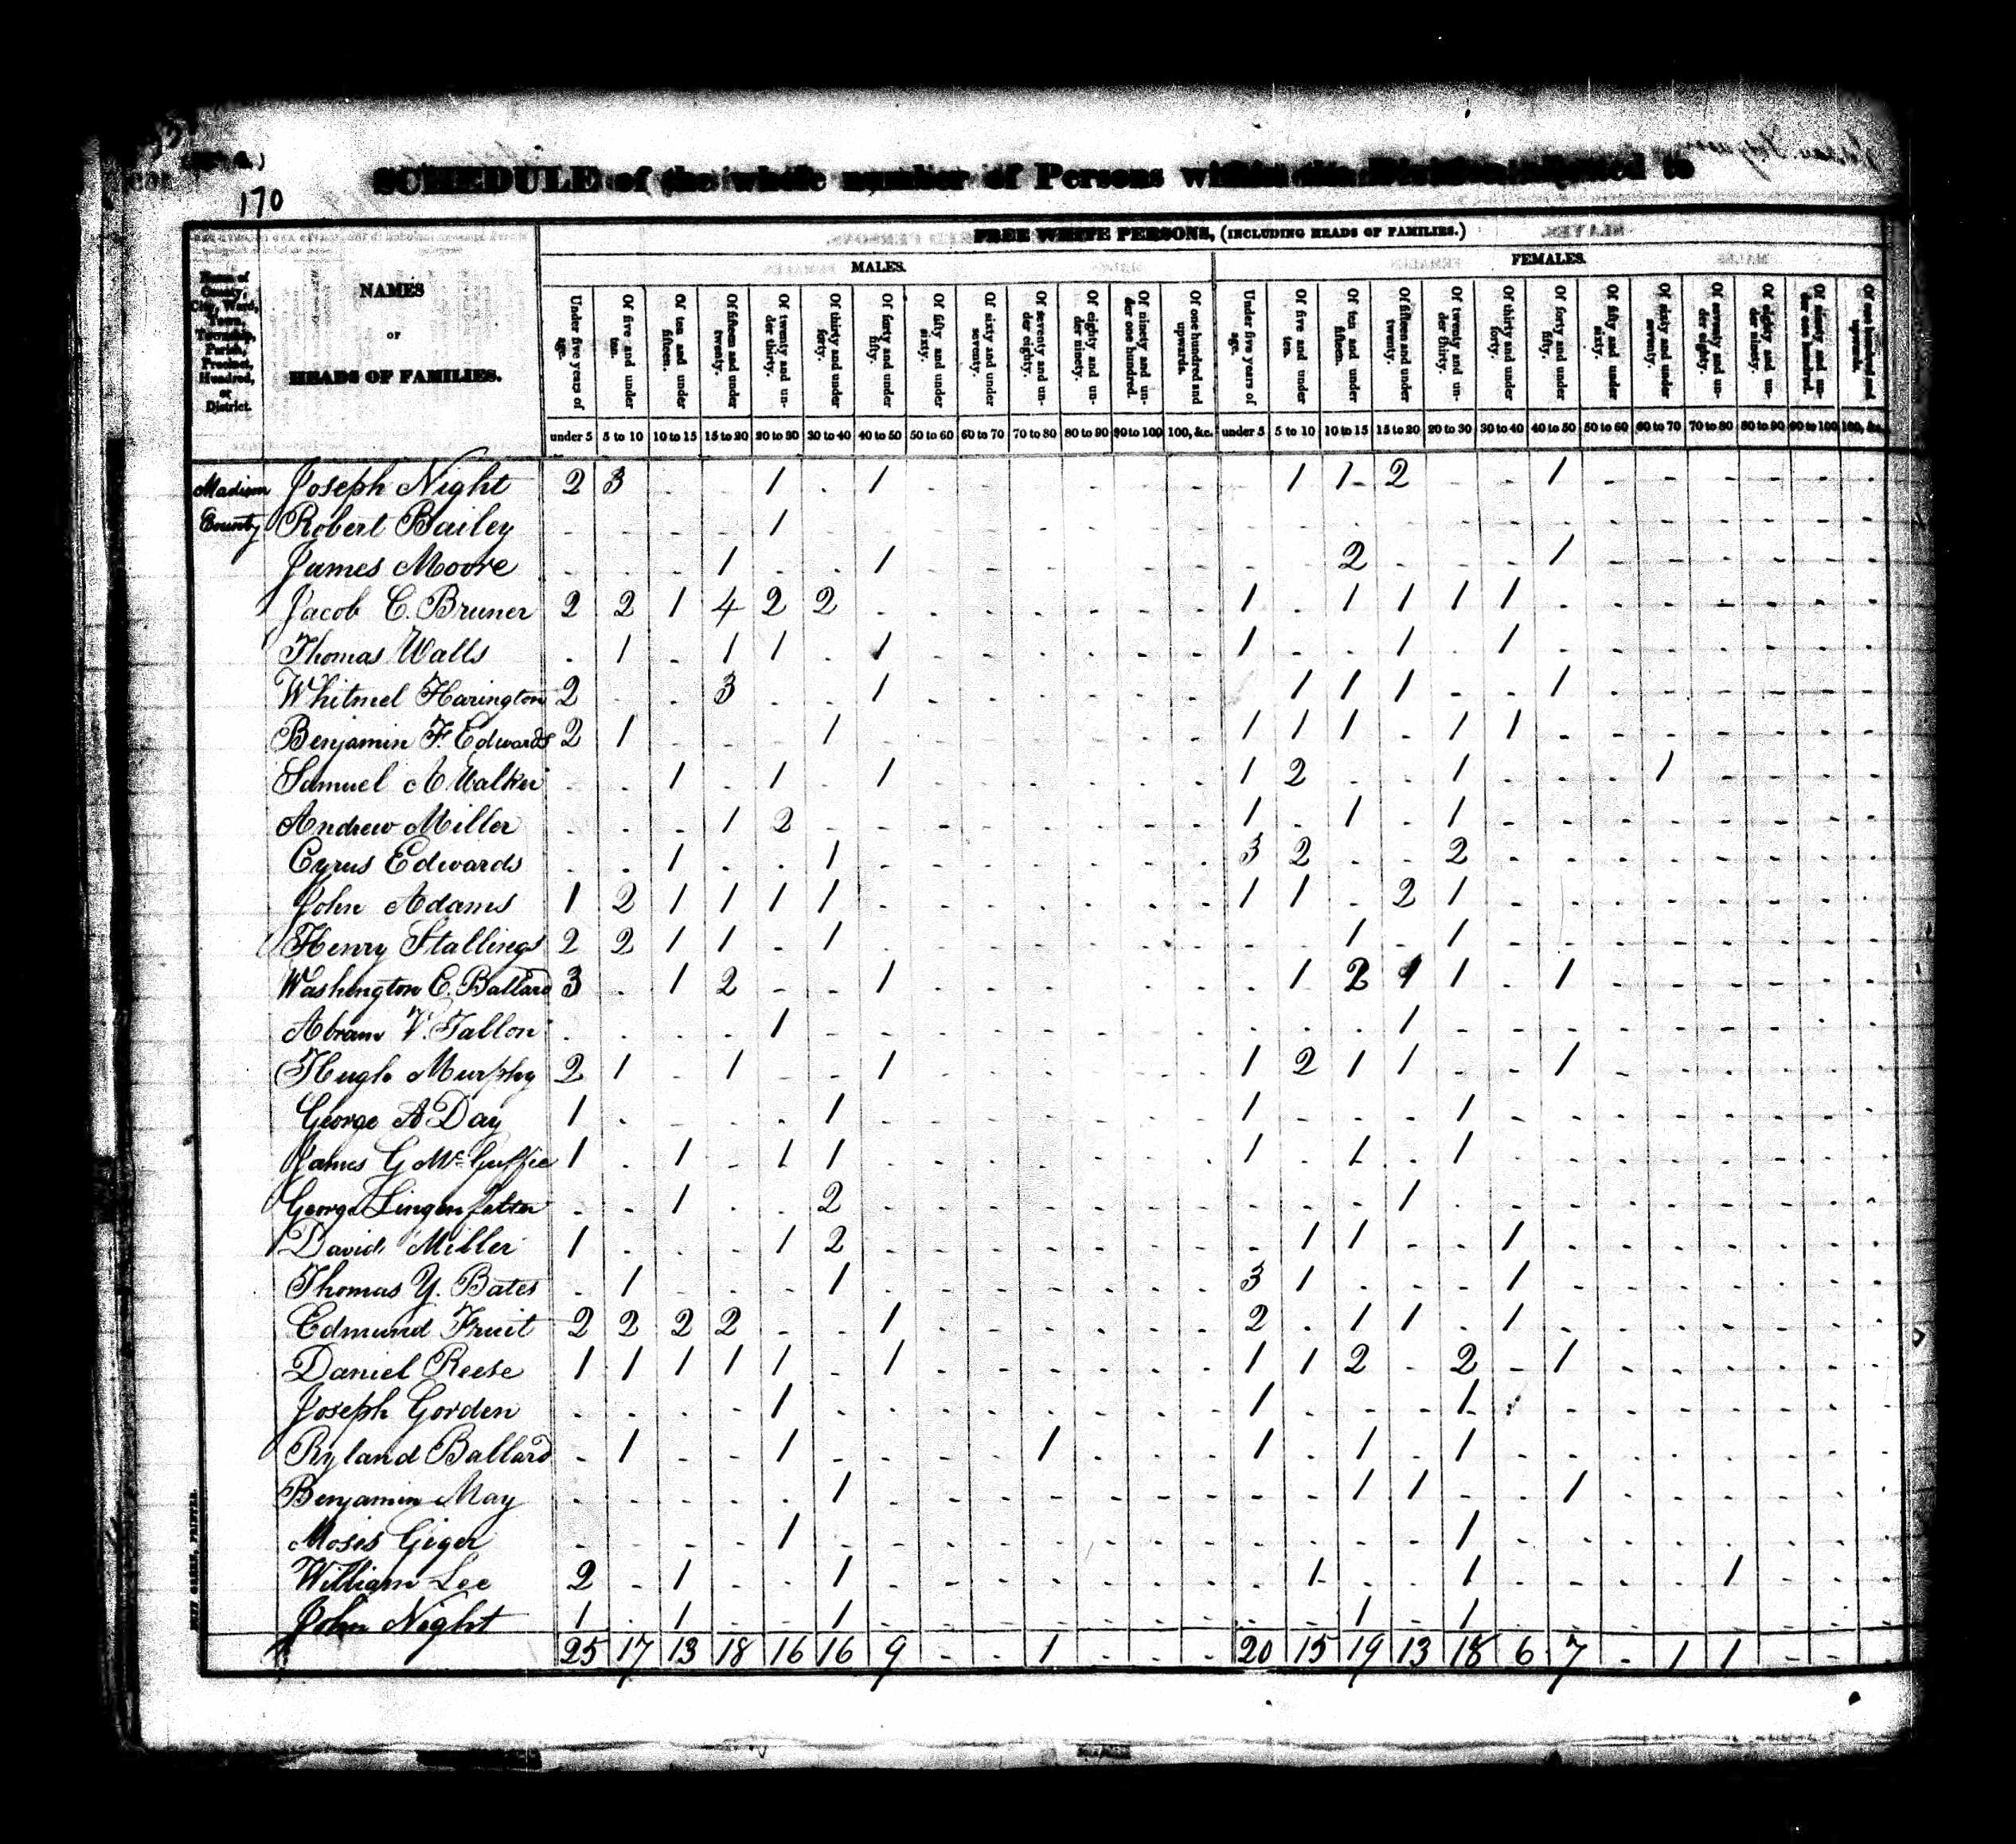 Samuel A. Walker, 1830 Madison County, Illinois, census